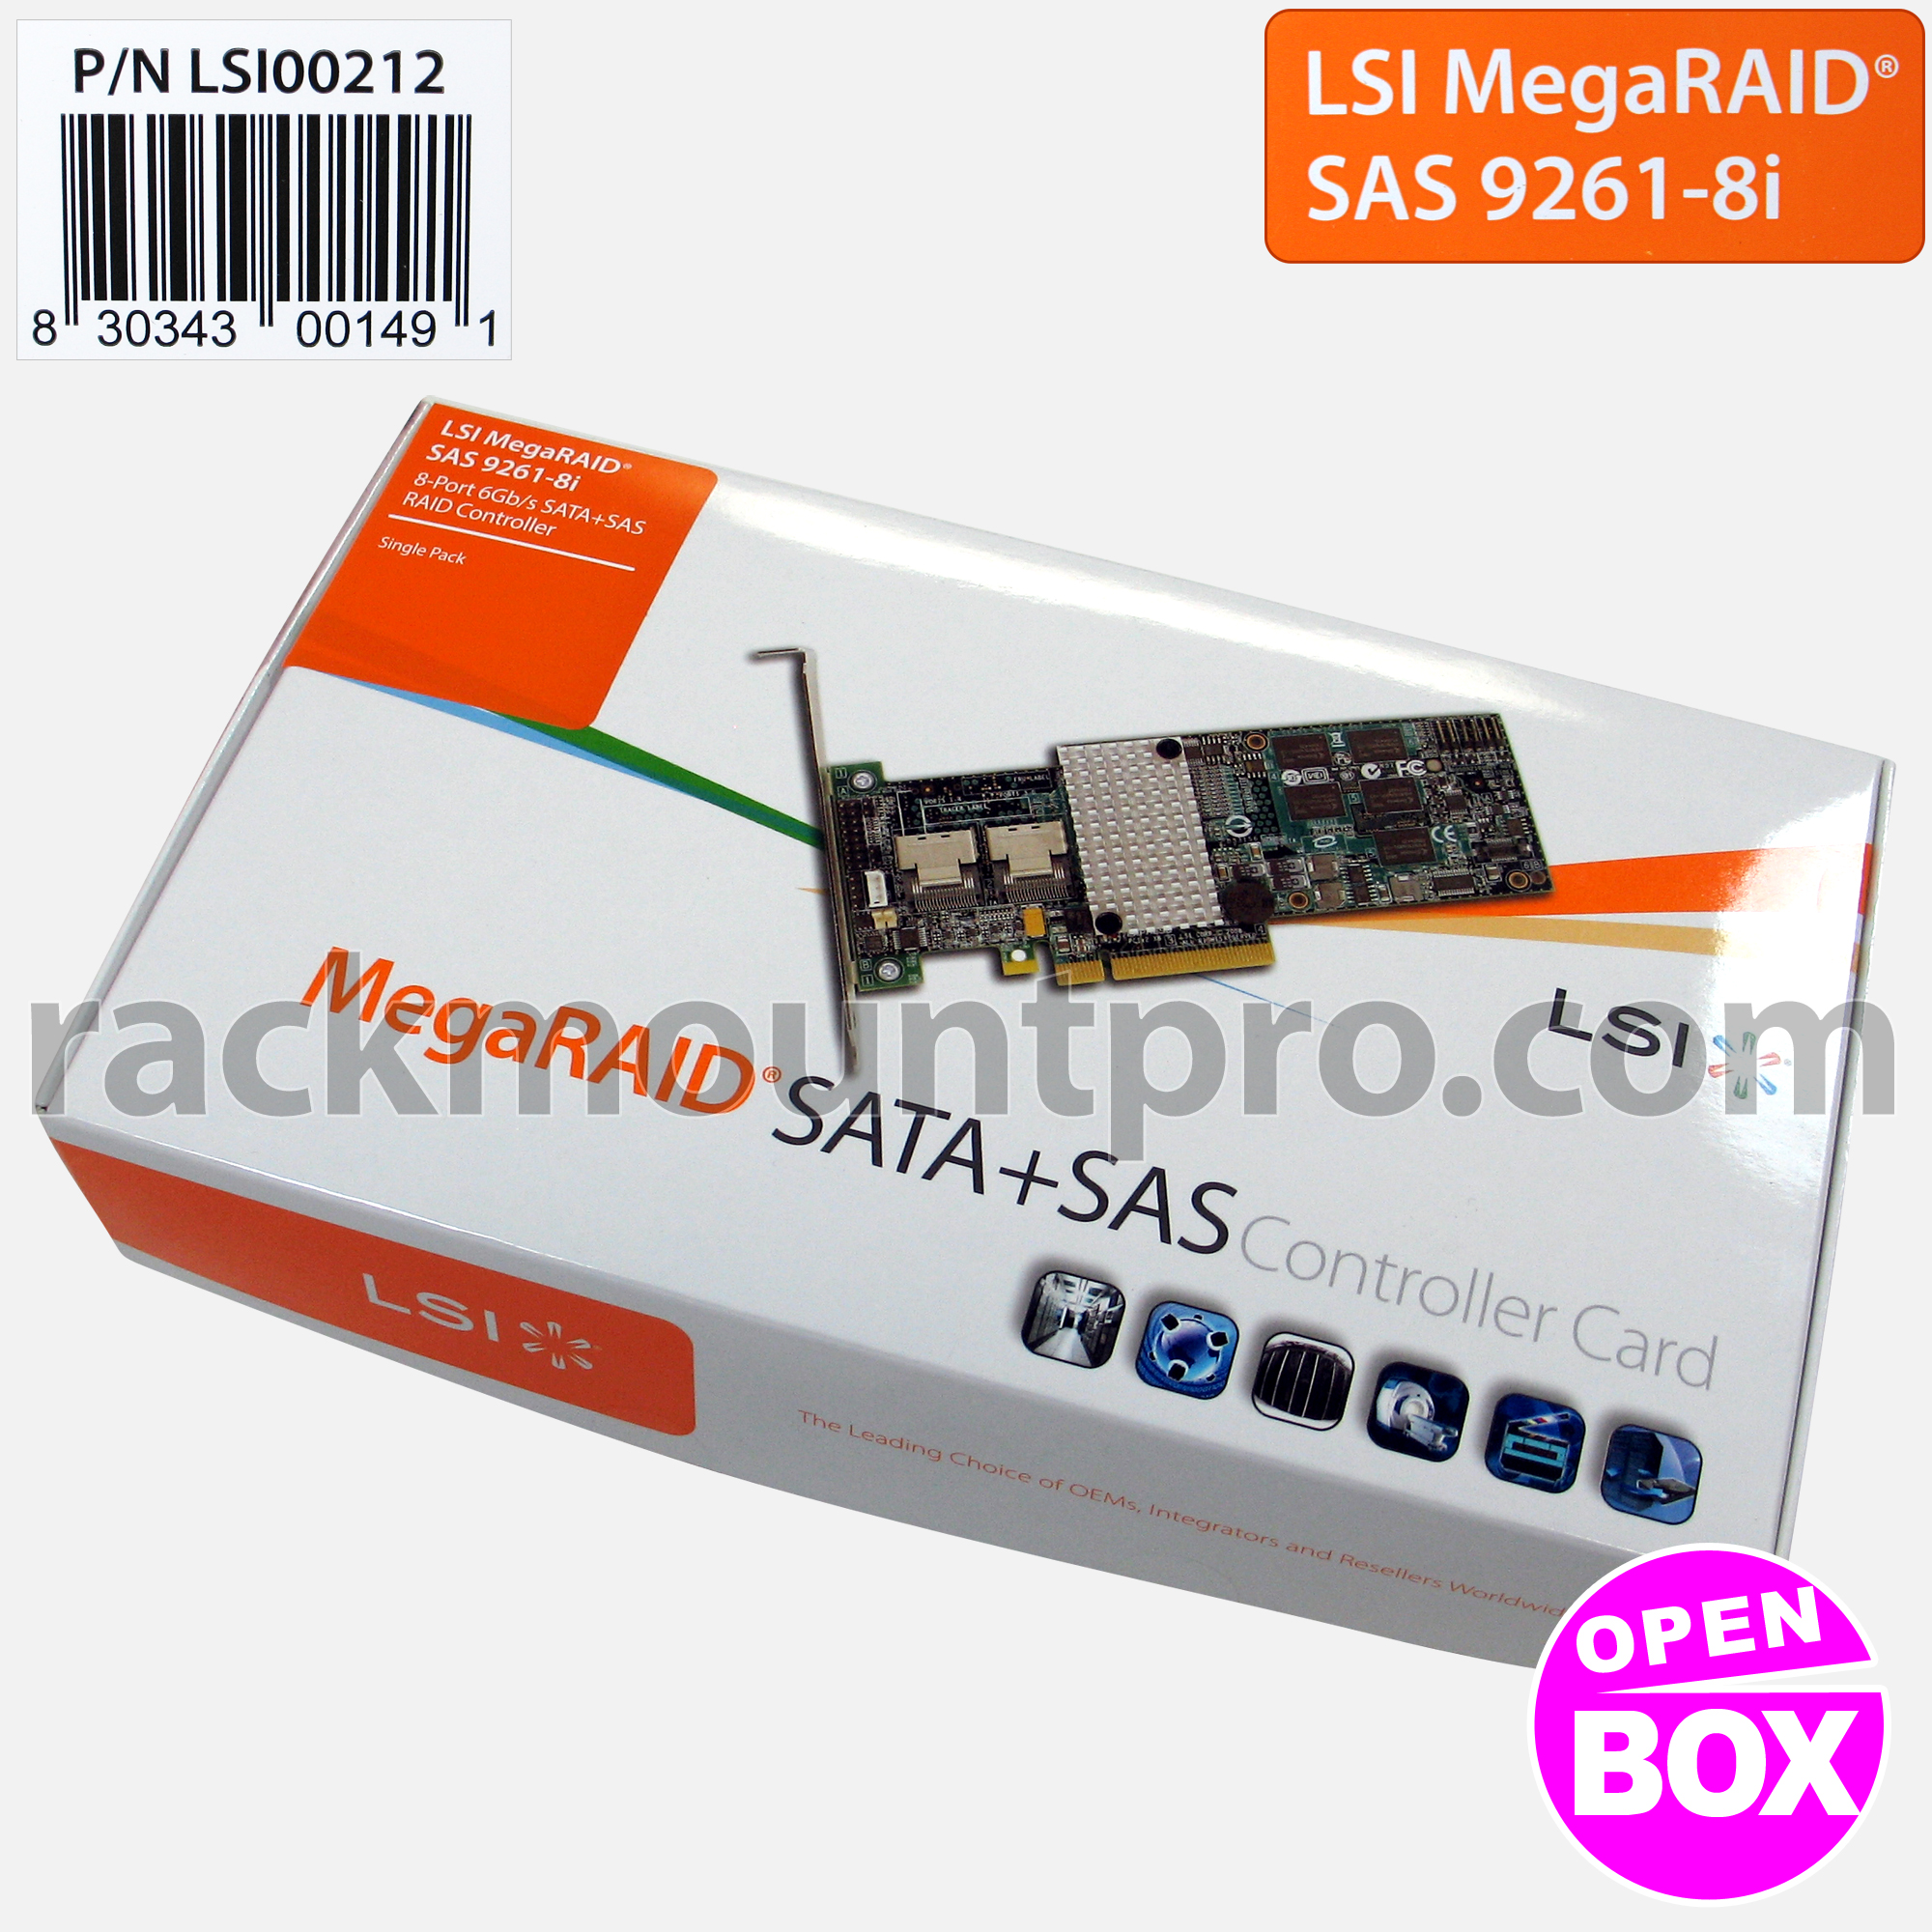 Standard Long Bracket for LSI MegaRAID SAS 9261-8i